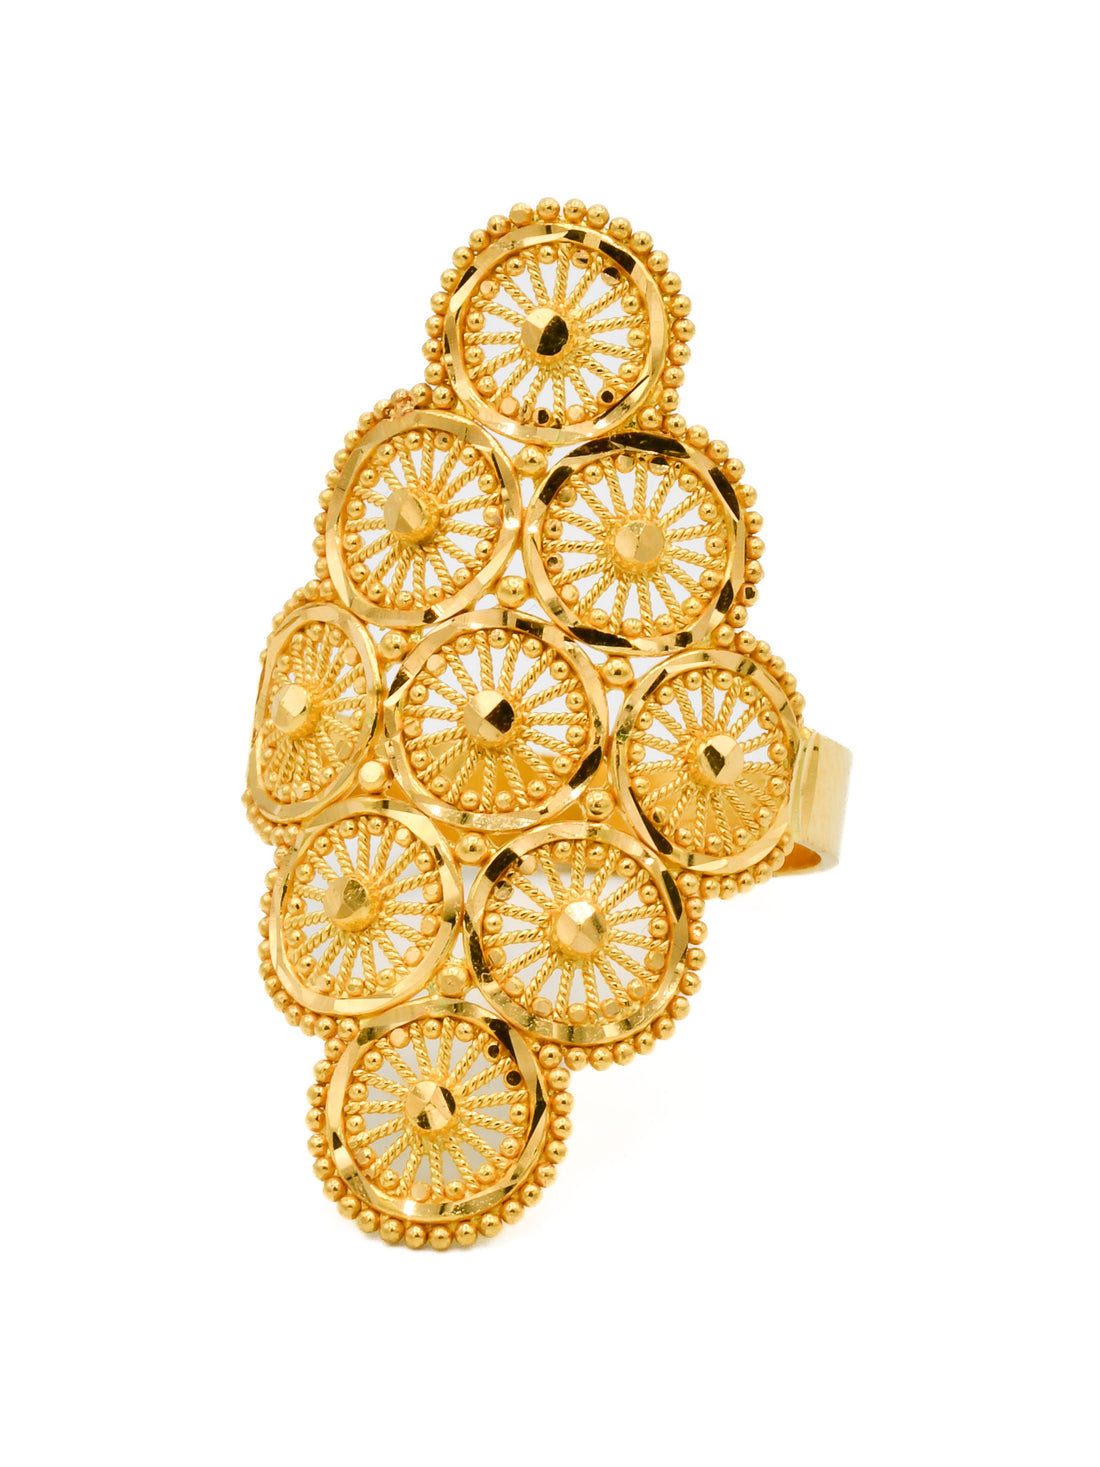 22ct Gold Ladies filigree Ring - Roop Darshan